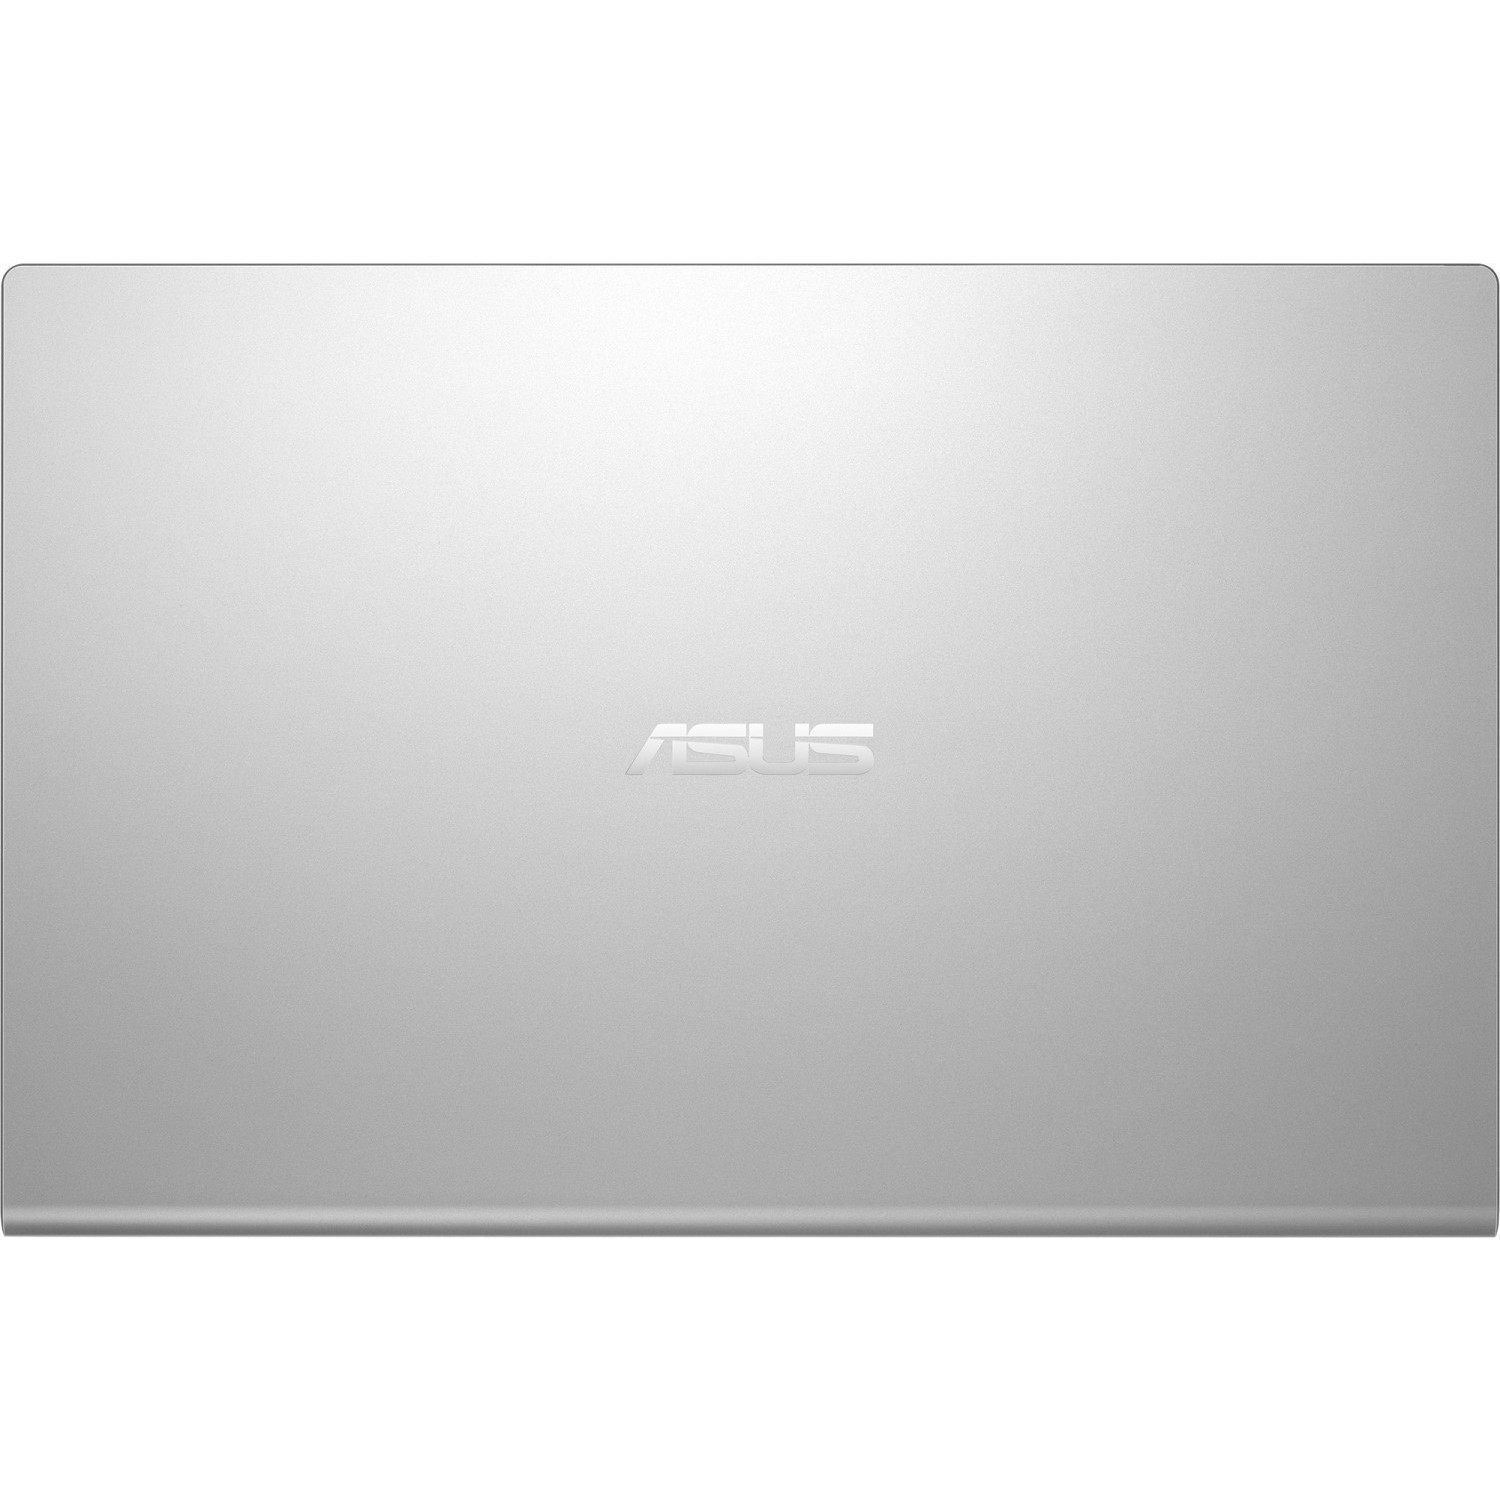 Ноутбук Asus R565ja Br763t Купить